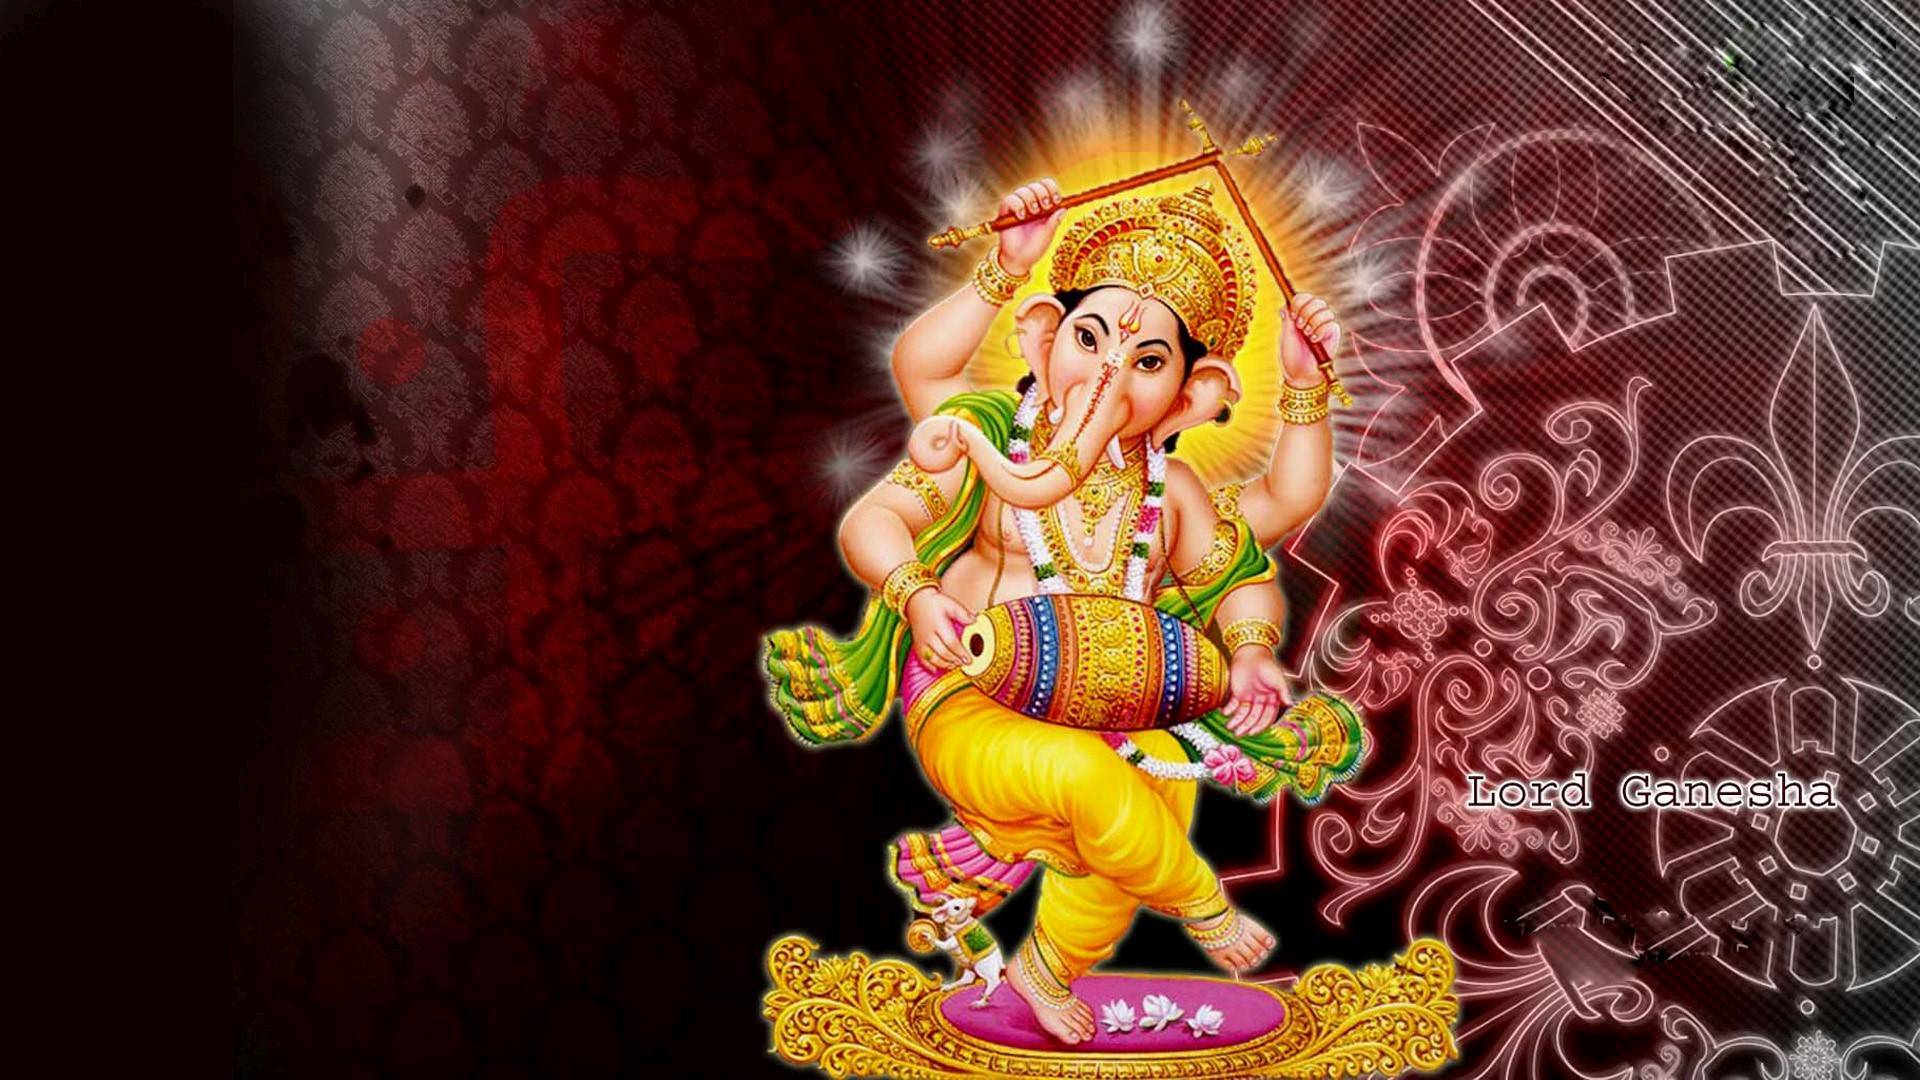 Lord Ganesha 1080p Hindu God HD Desktop Wallpapers | Hindu Gods and